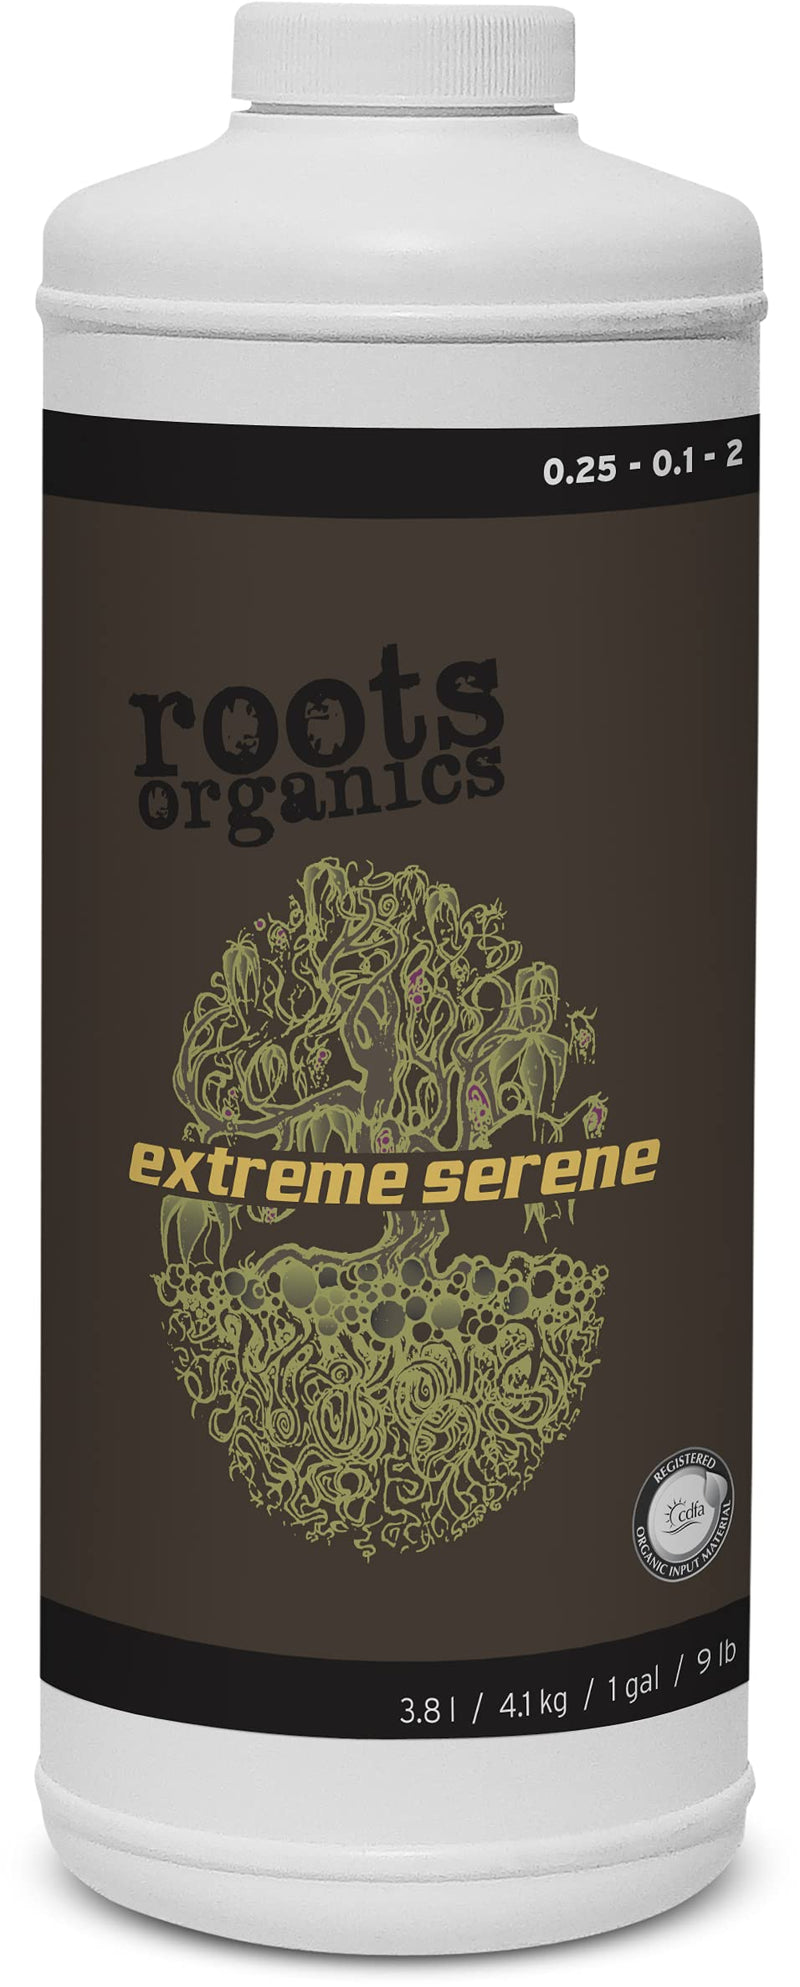 roots organics Extreme Serene, Organic Kelp-Based Liquid Fertilizer.25-.1-2 NPK, Quart